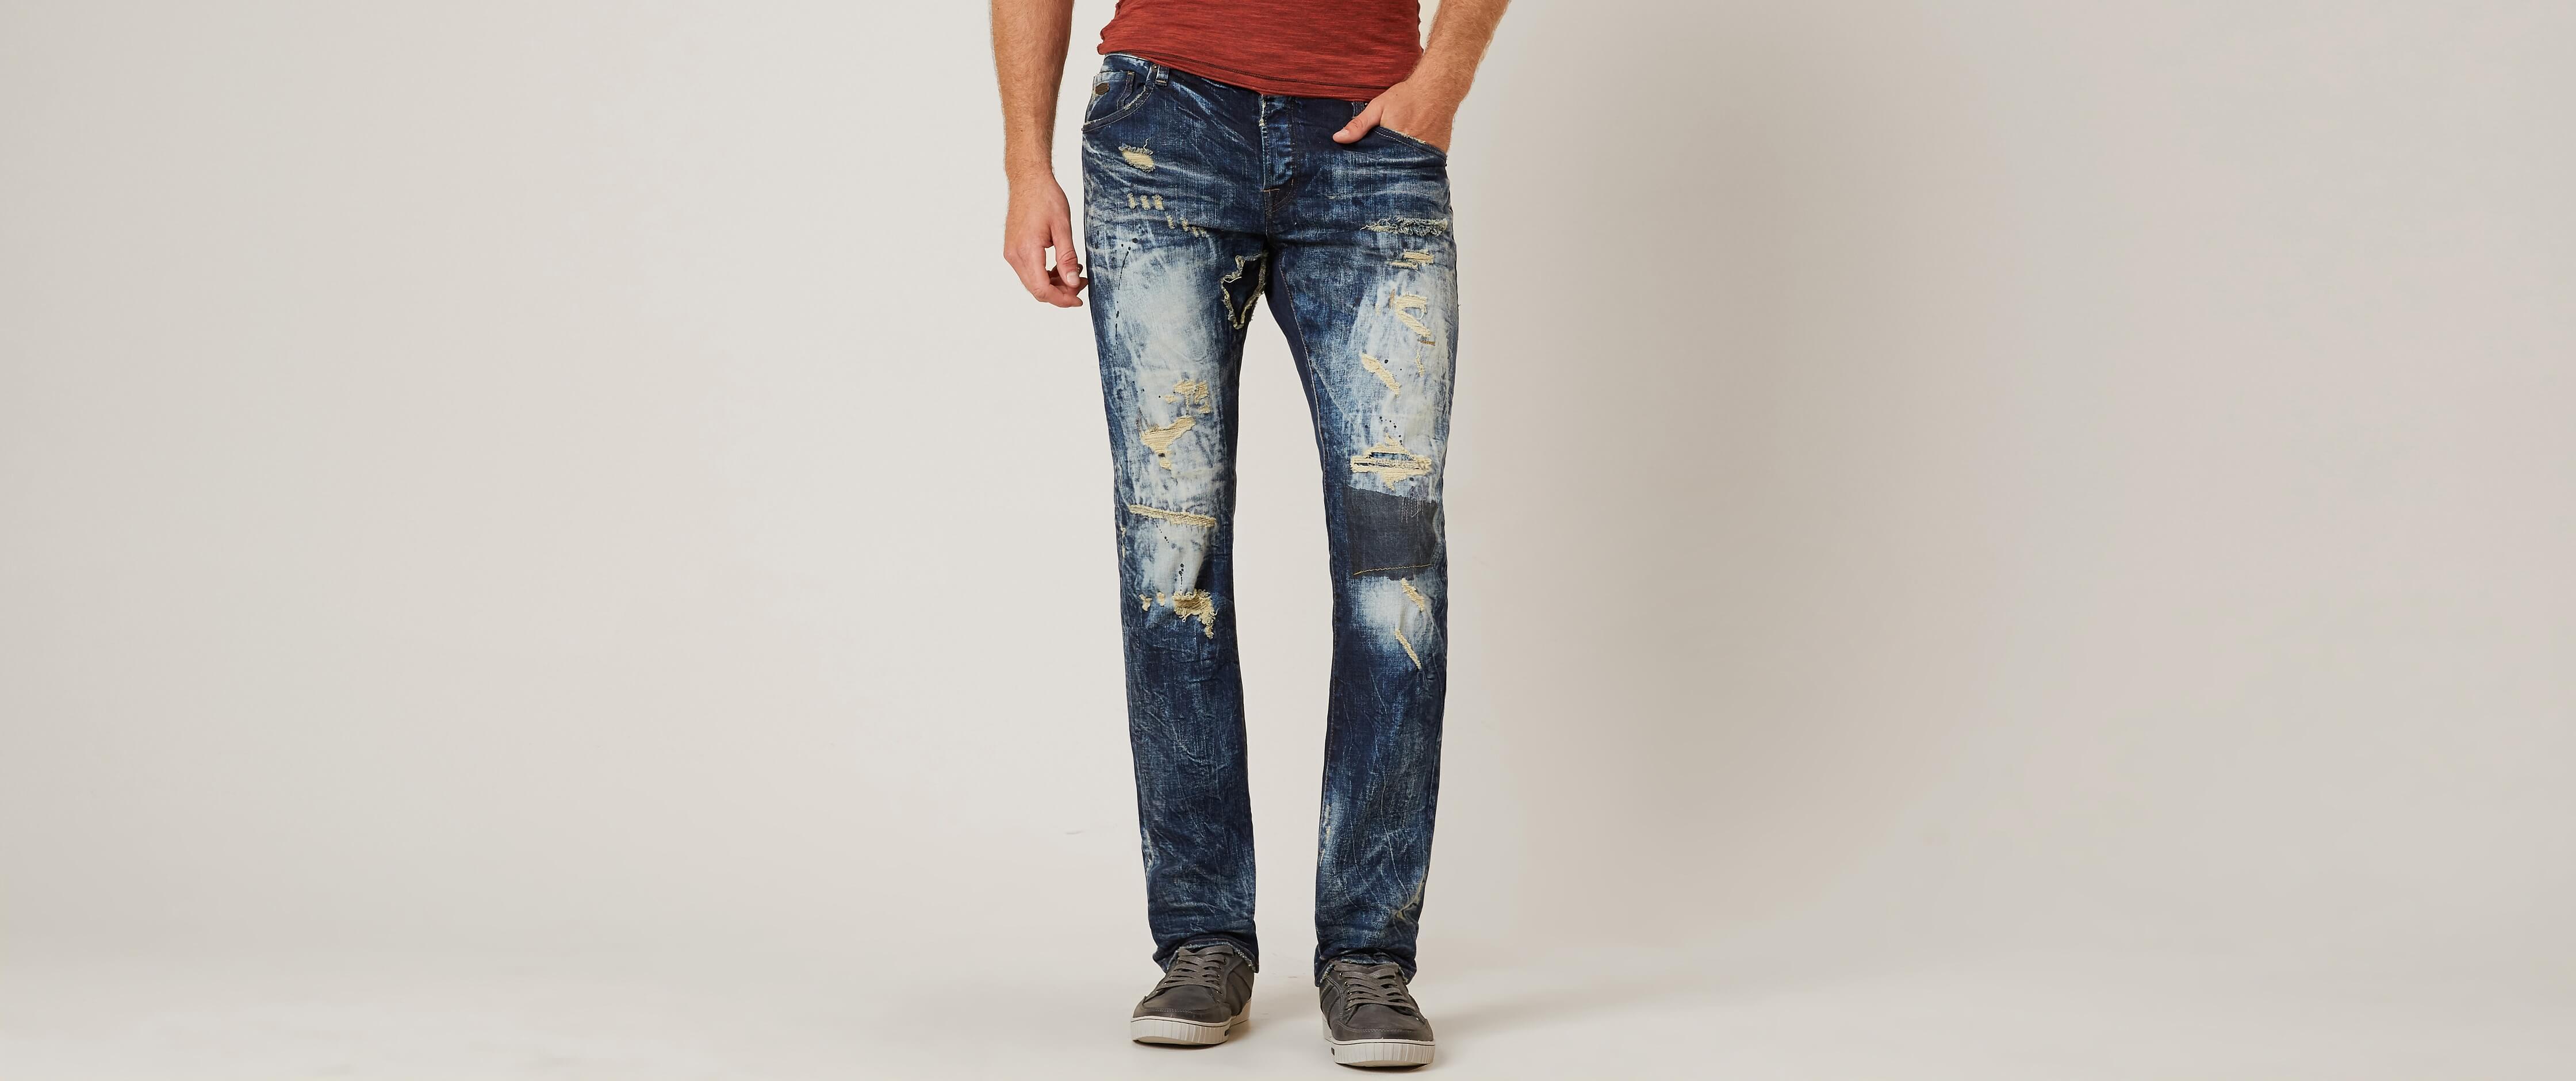 buckaroo jeans price